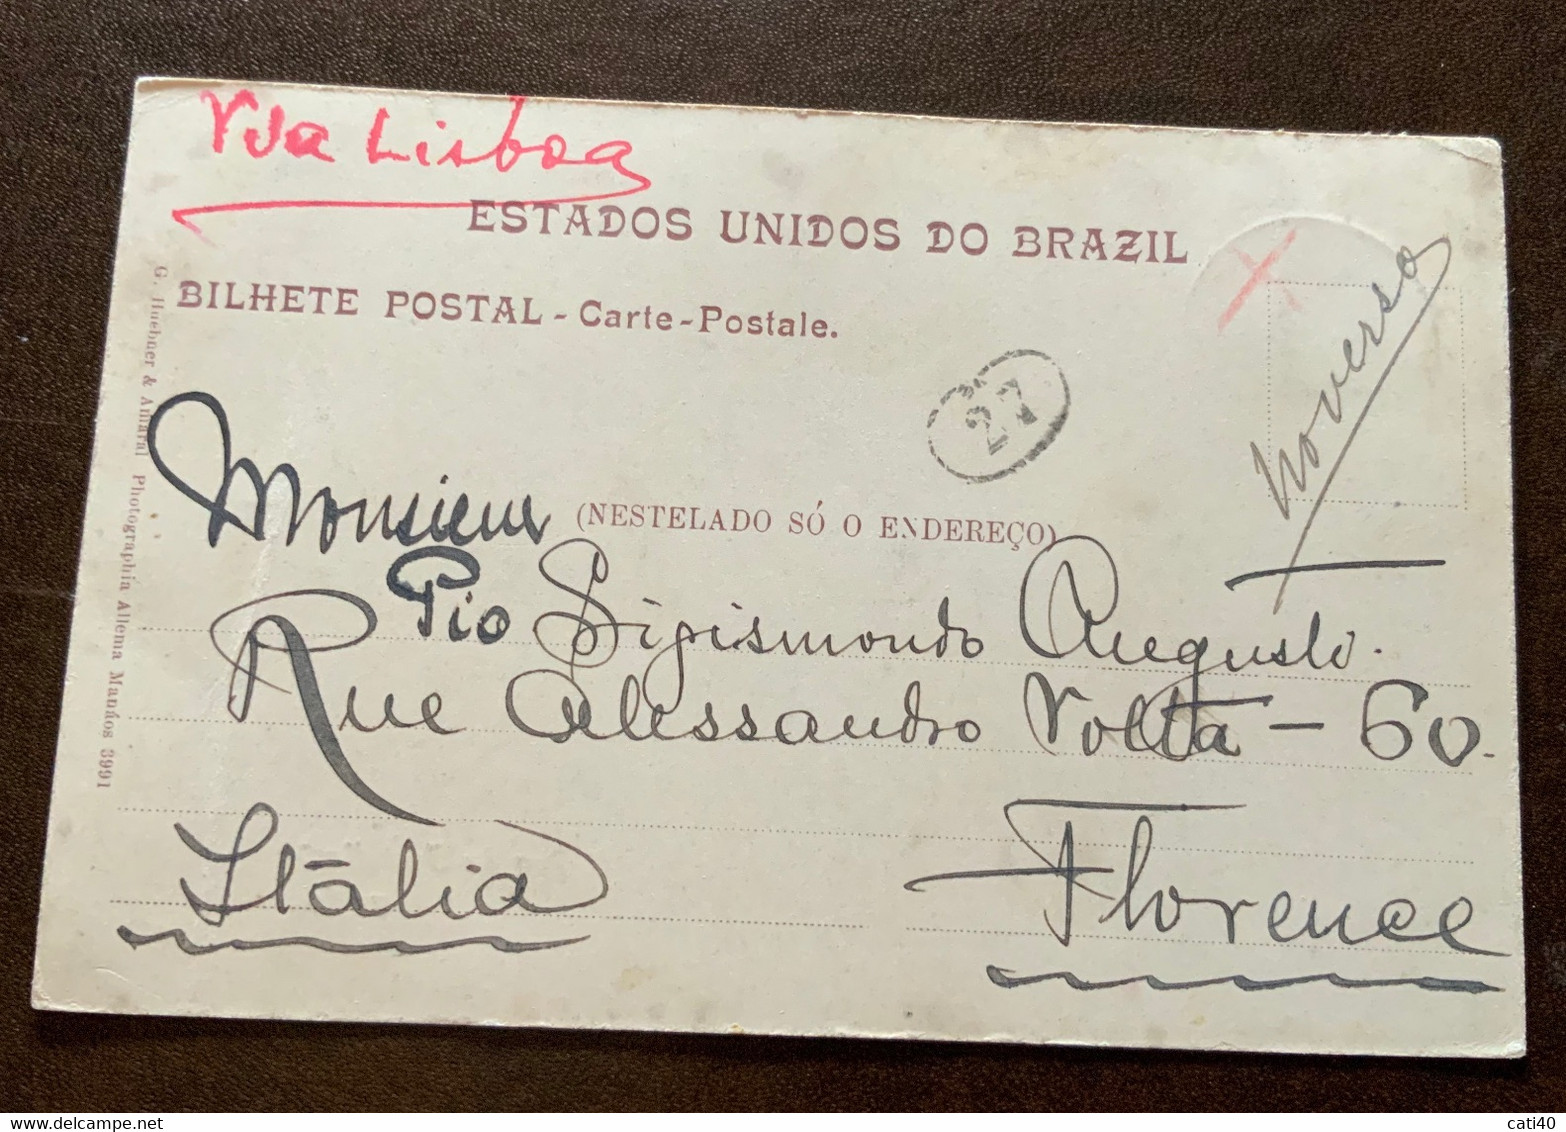 BRASIL - MANAOS - RUA DE INSTALAÇÃO - VIA LISBOA FROM  MANAOS AMAZZONAS 12/11/06 To  FLORENCE - ITALY - 1950 – Brasilien